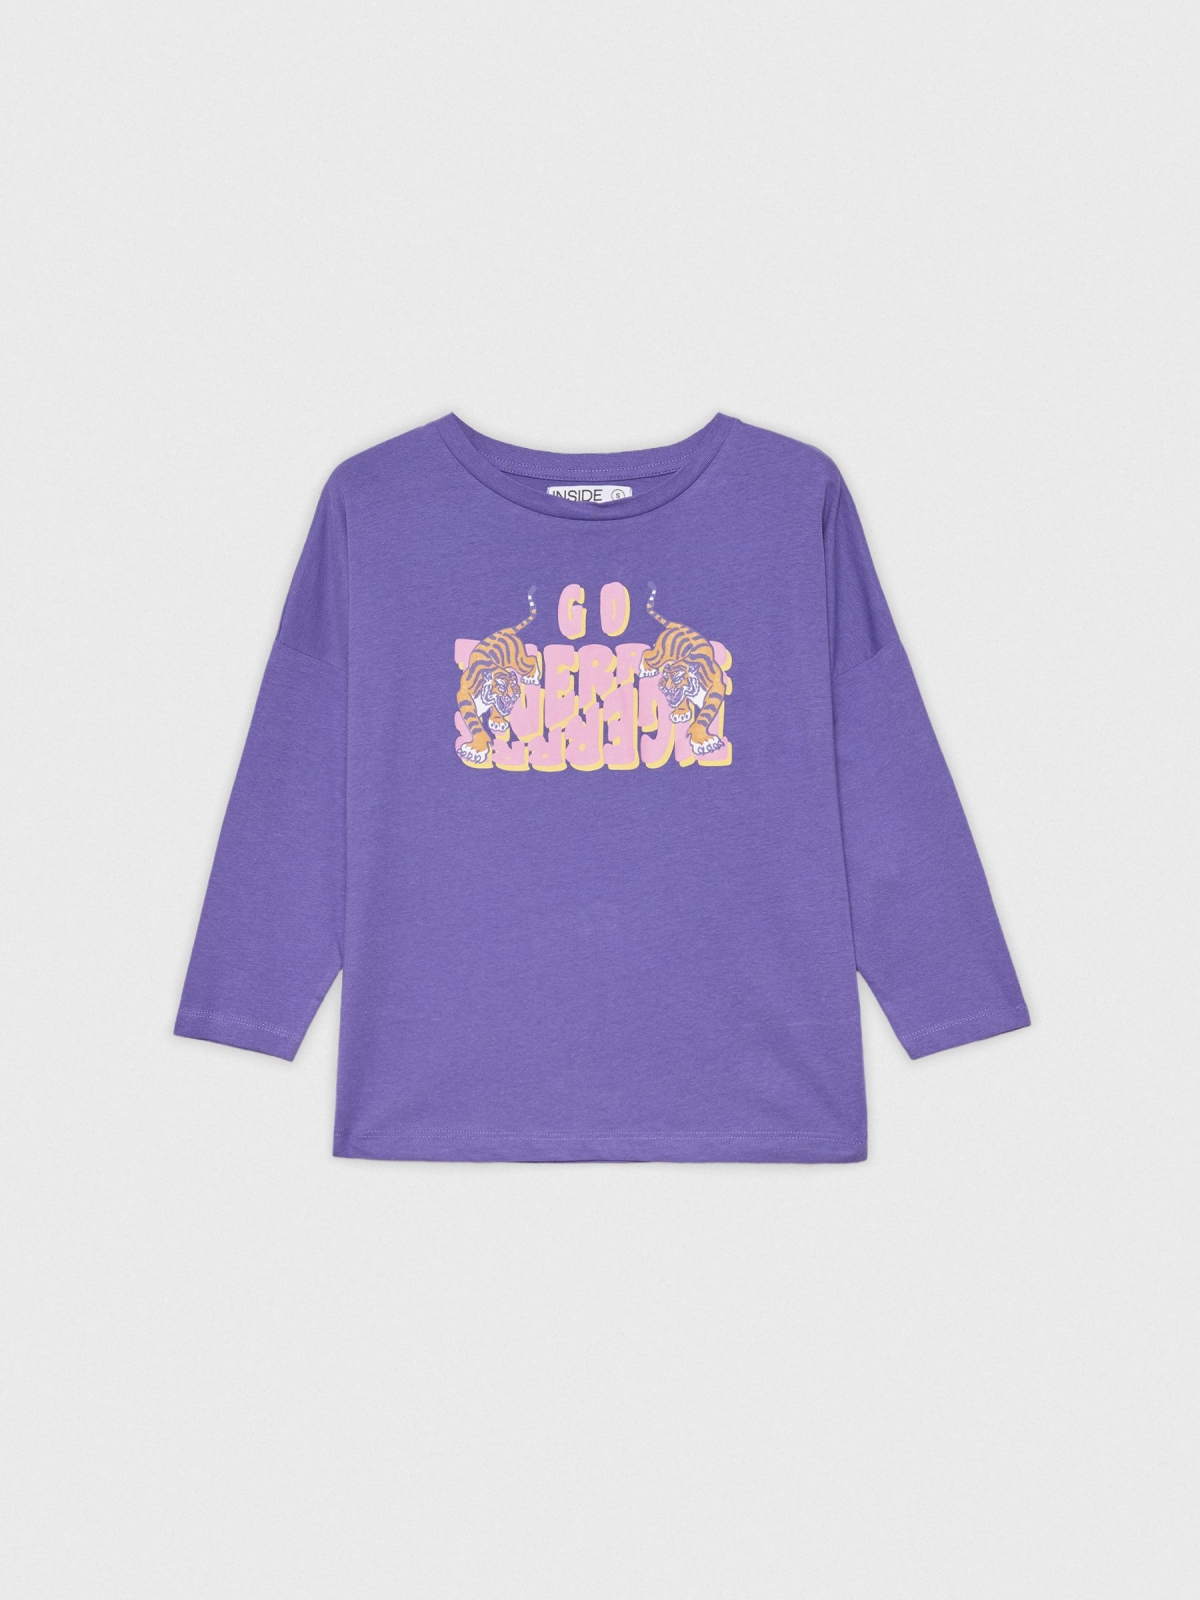  T-shirt normal do tigre violeta